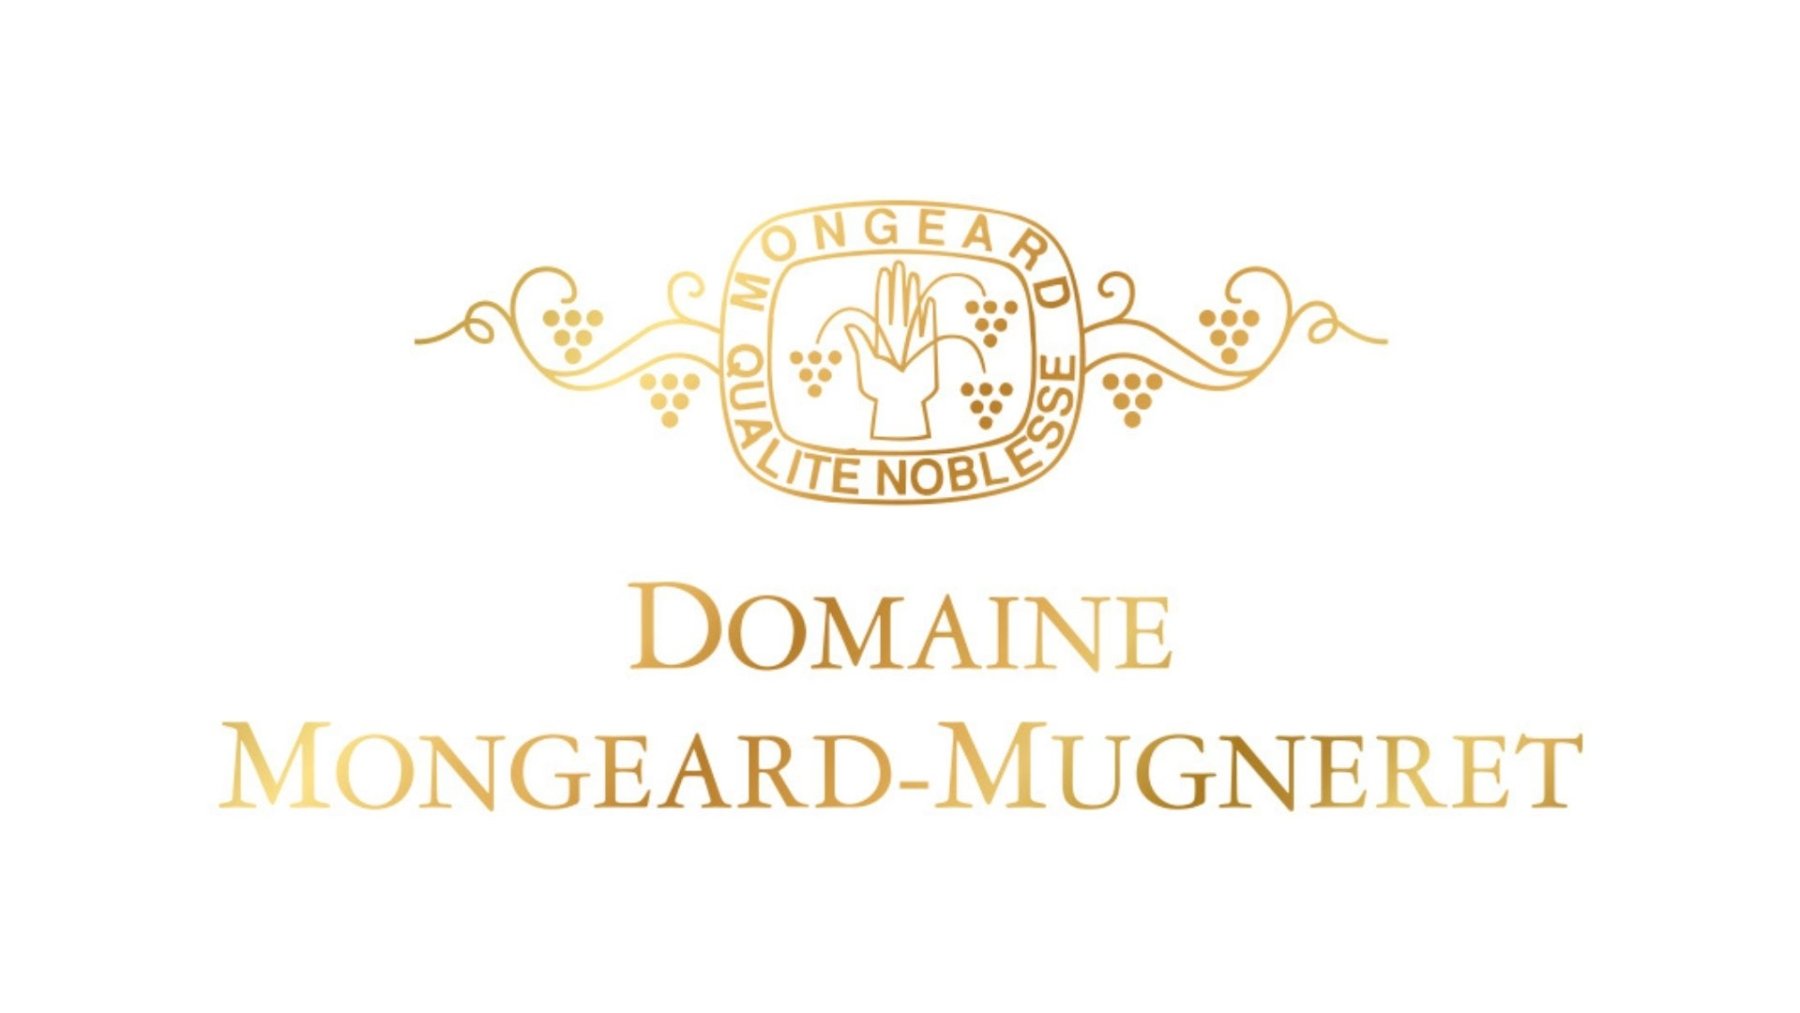 DOMAINE MONGEARD-MUGNERET